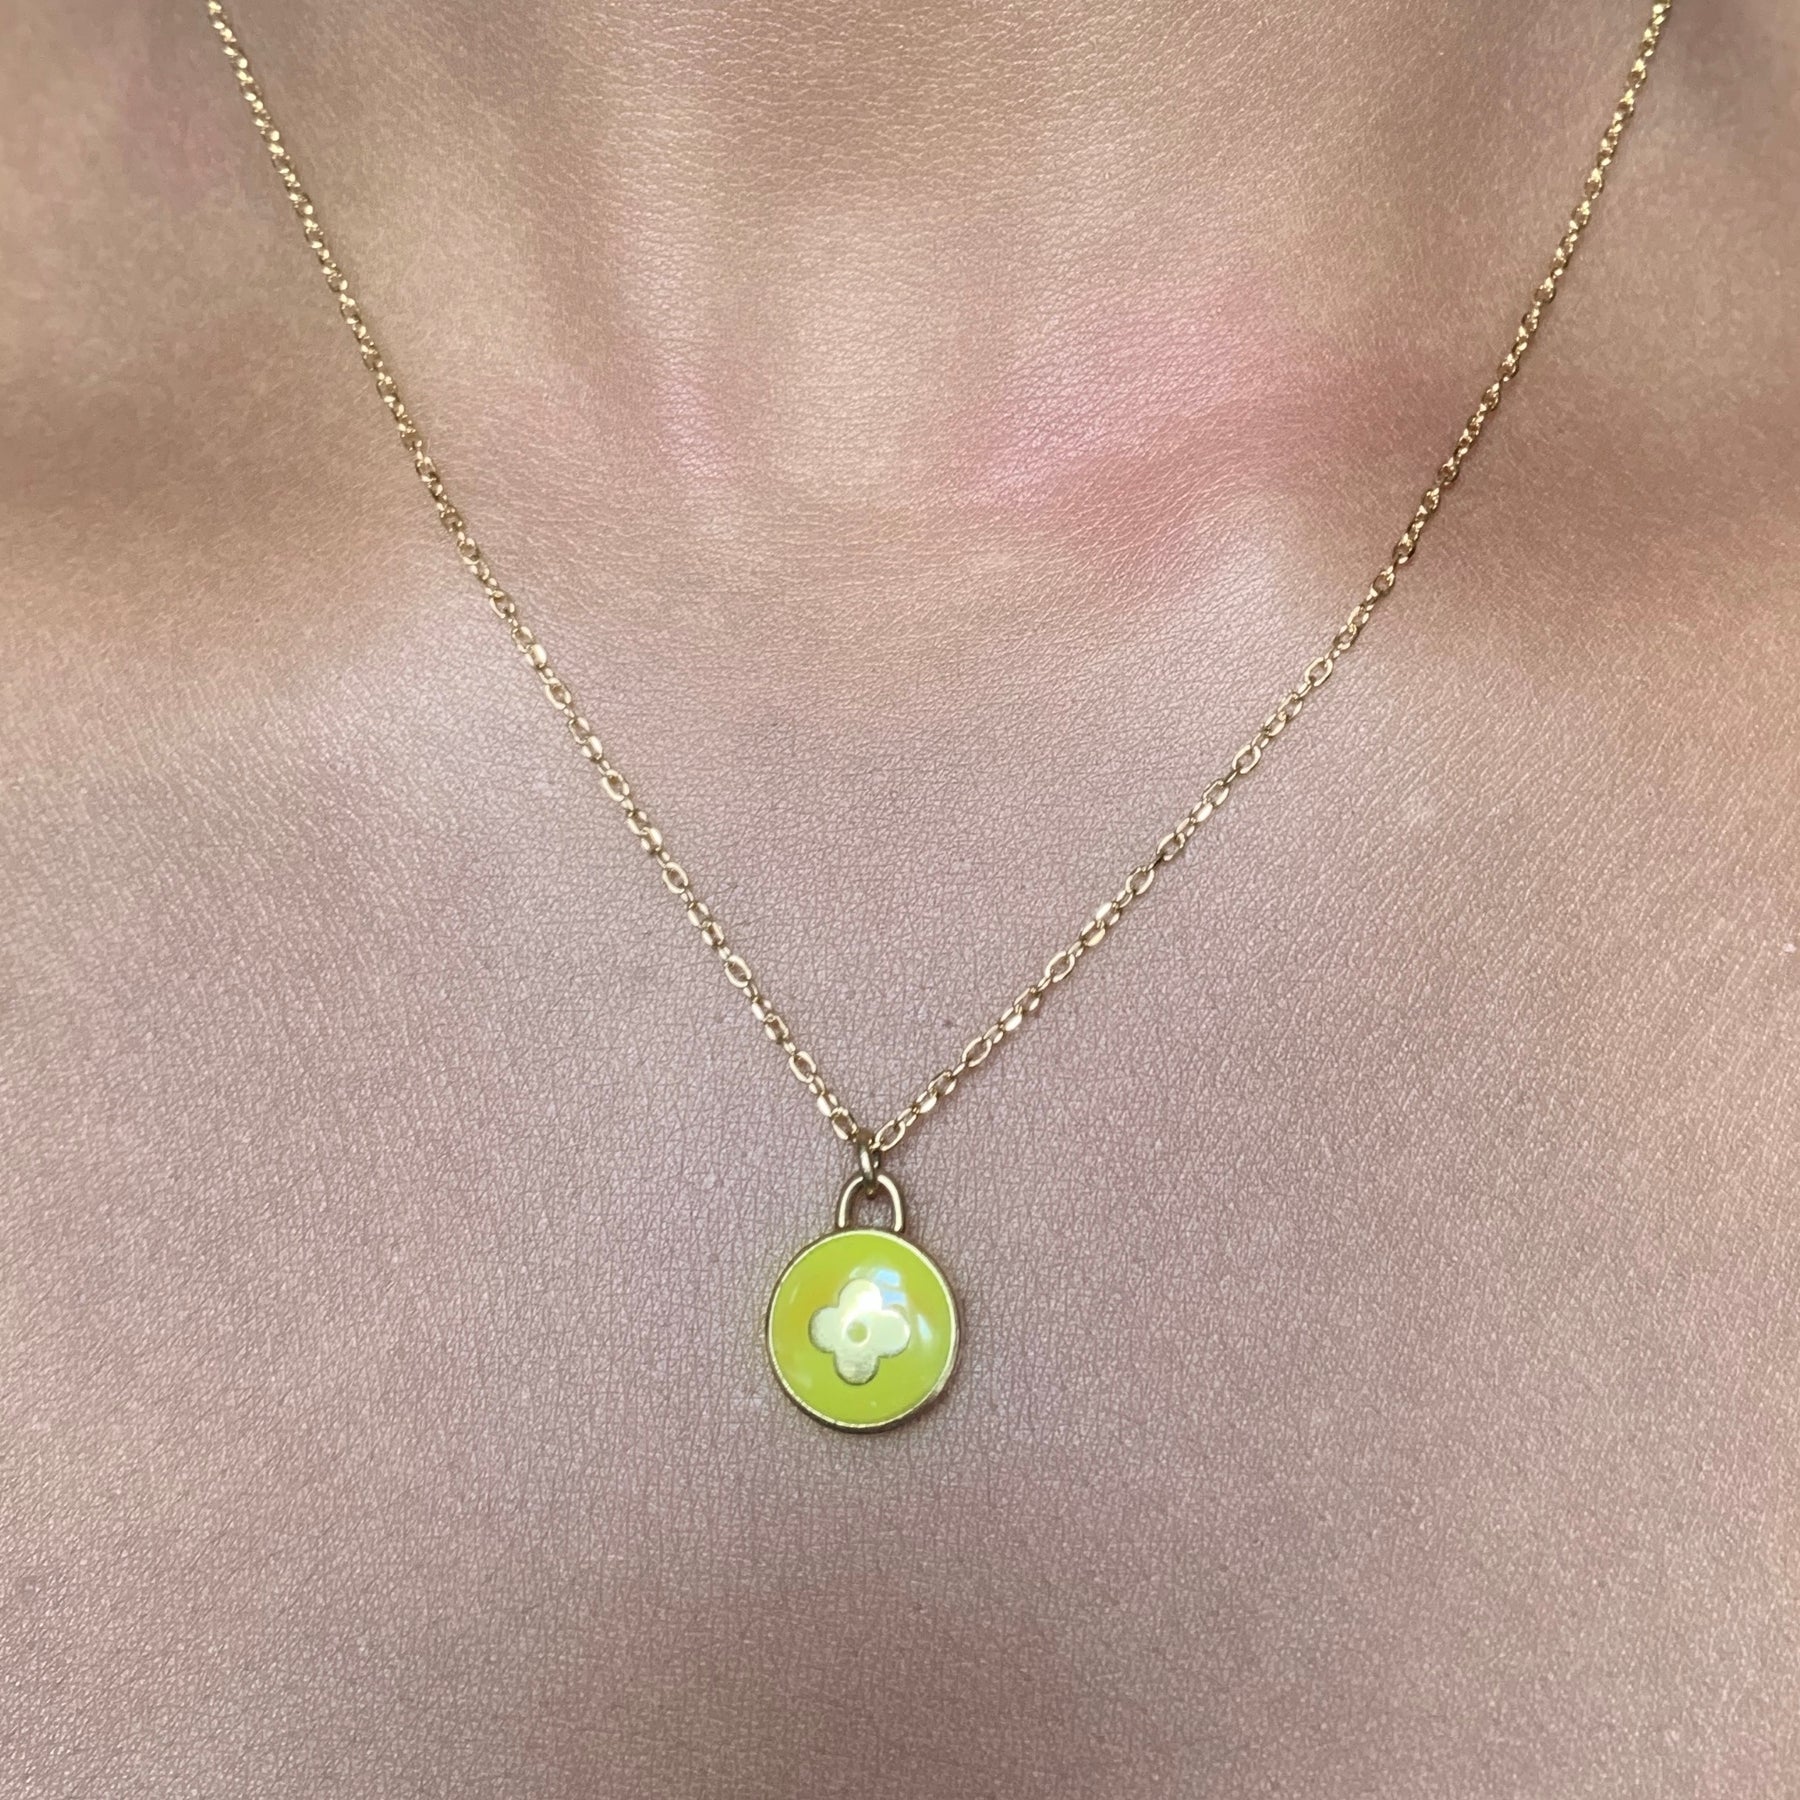 LV clover pendant necklace